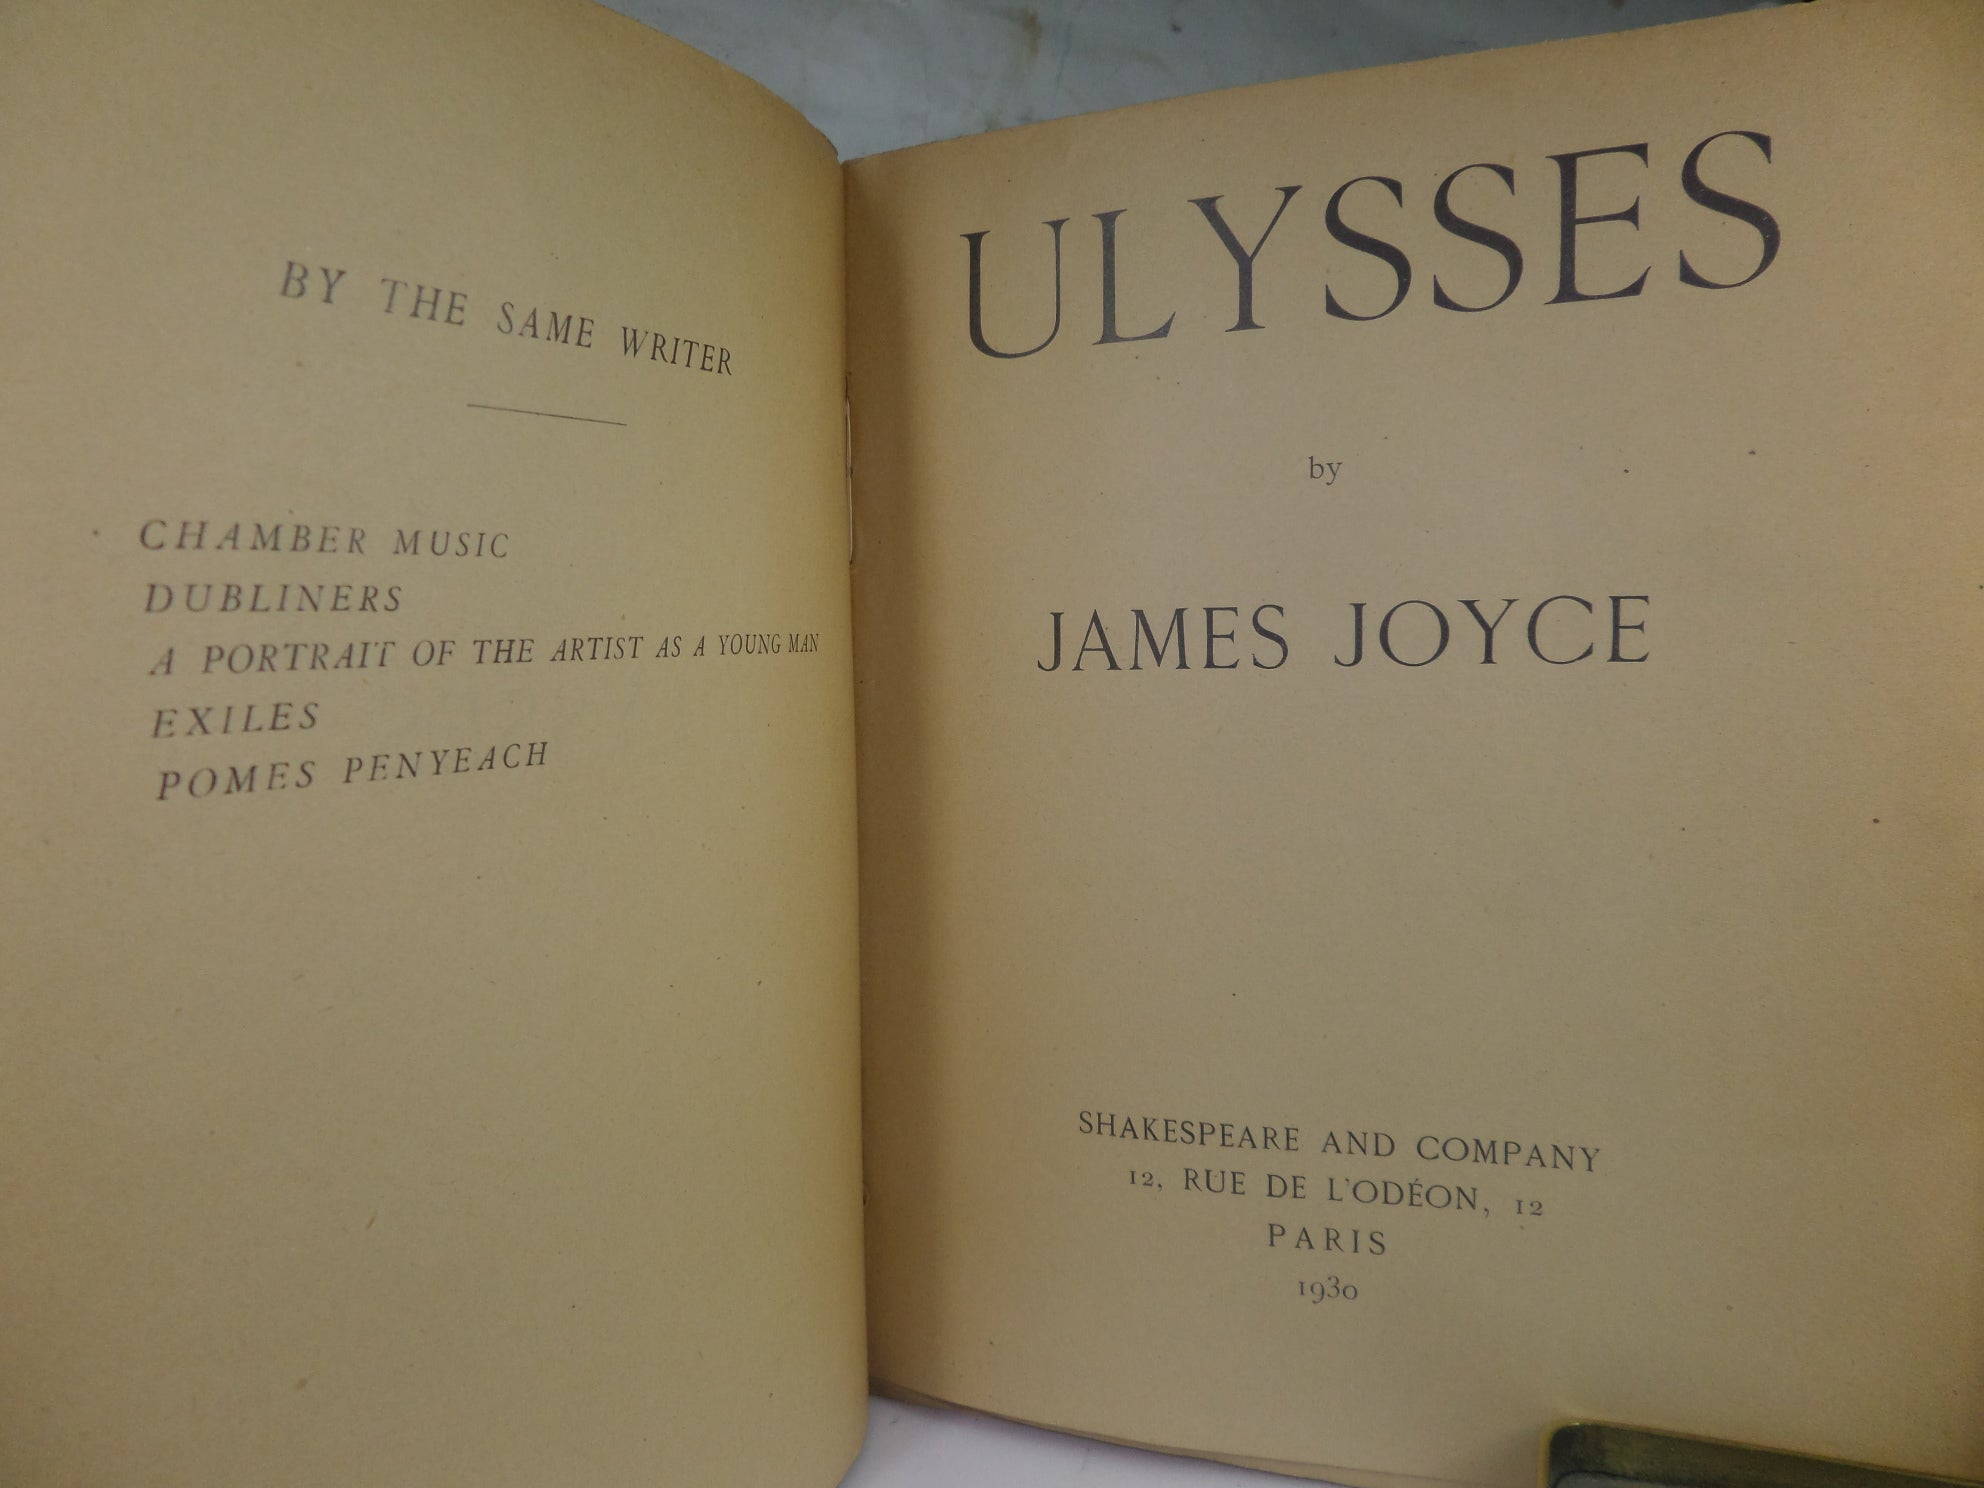 ULYSSES BY JAMES JOYCE 1930 ELEVENTH PRINTING